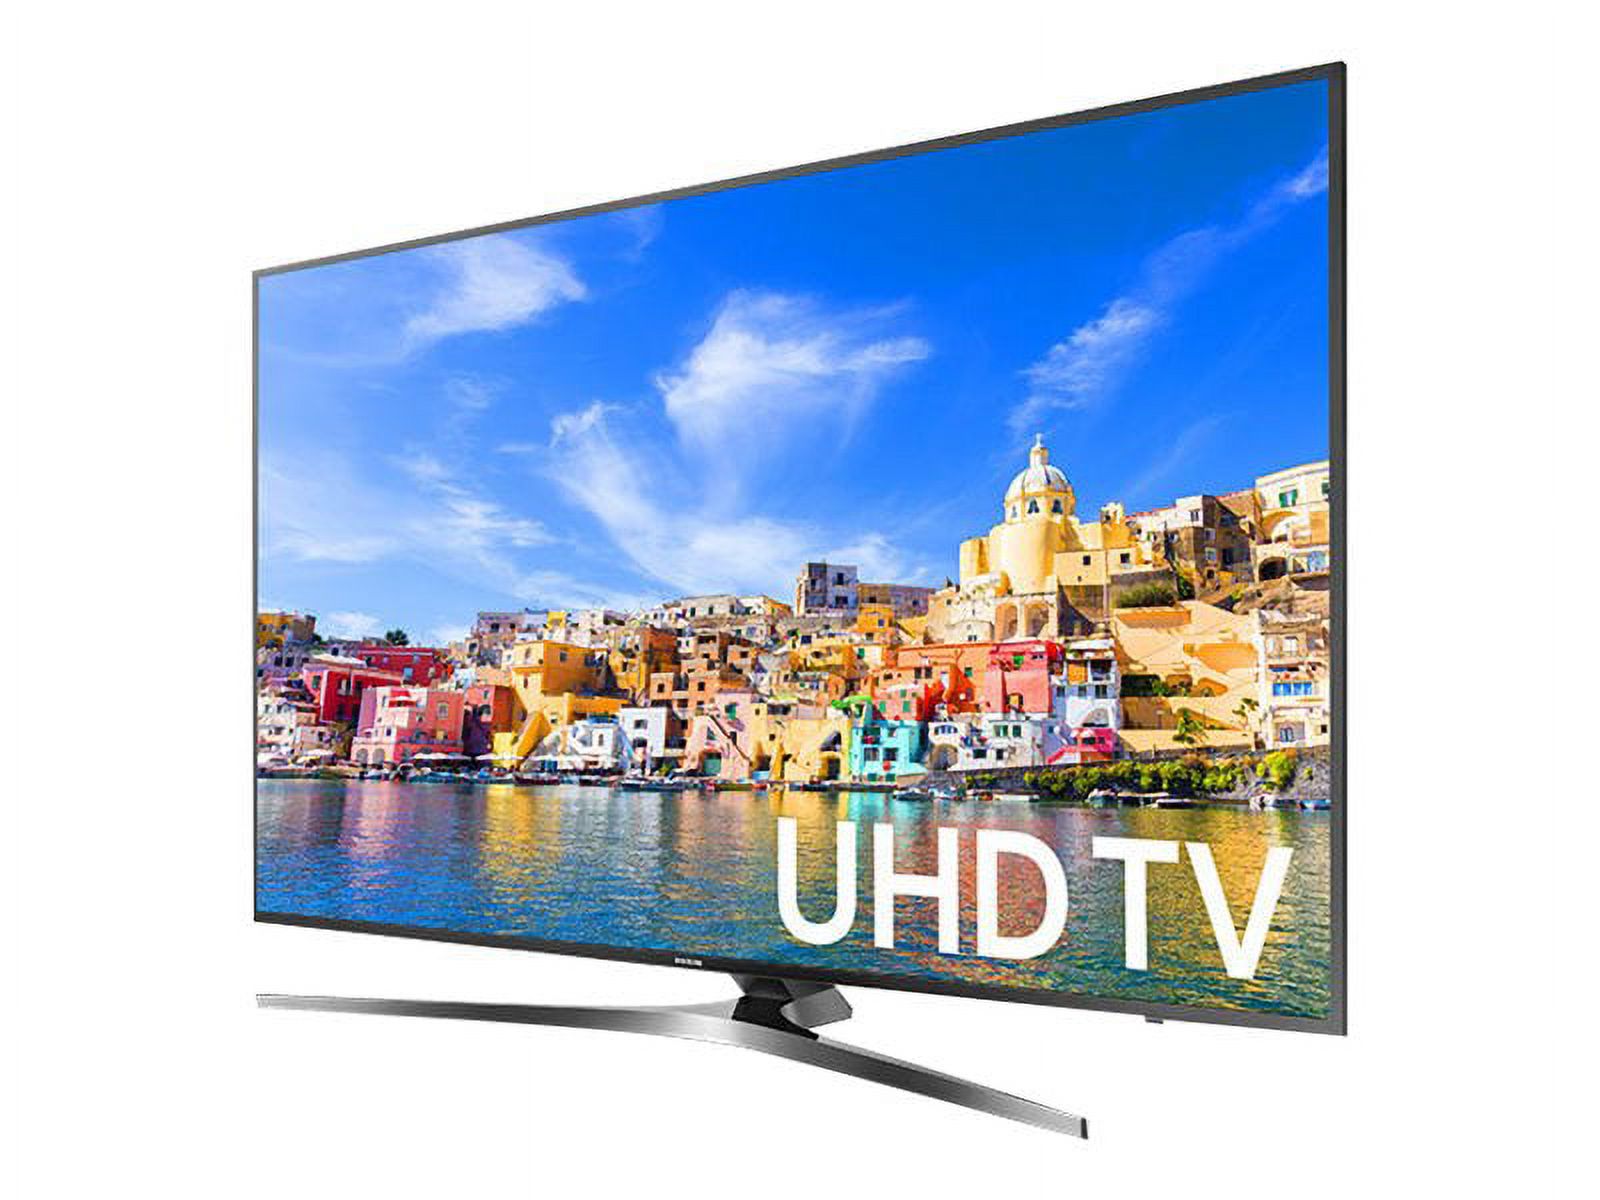 Samsung 40" Class Smart LED-LCD TV (UN40KU7000F) - image 1 of 23